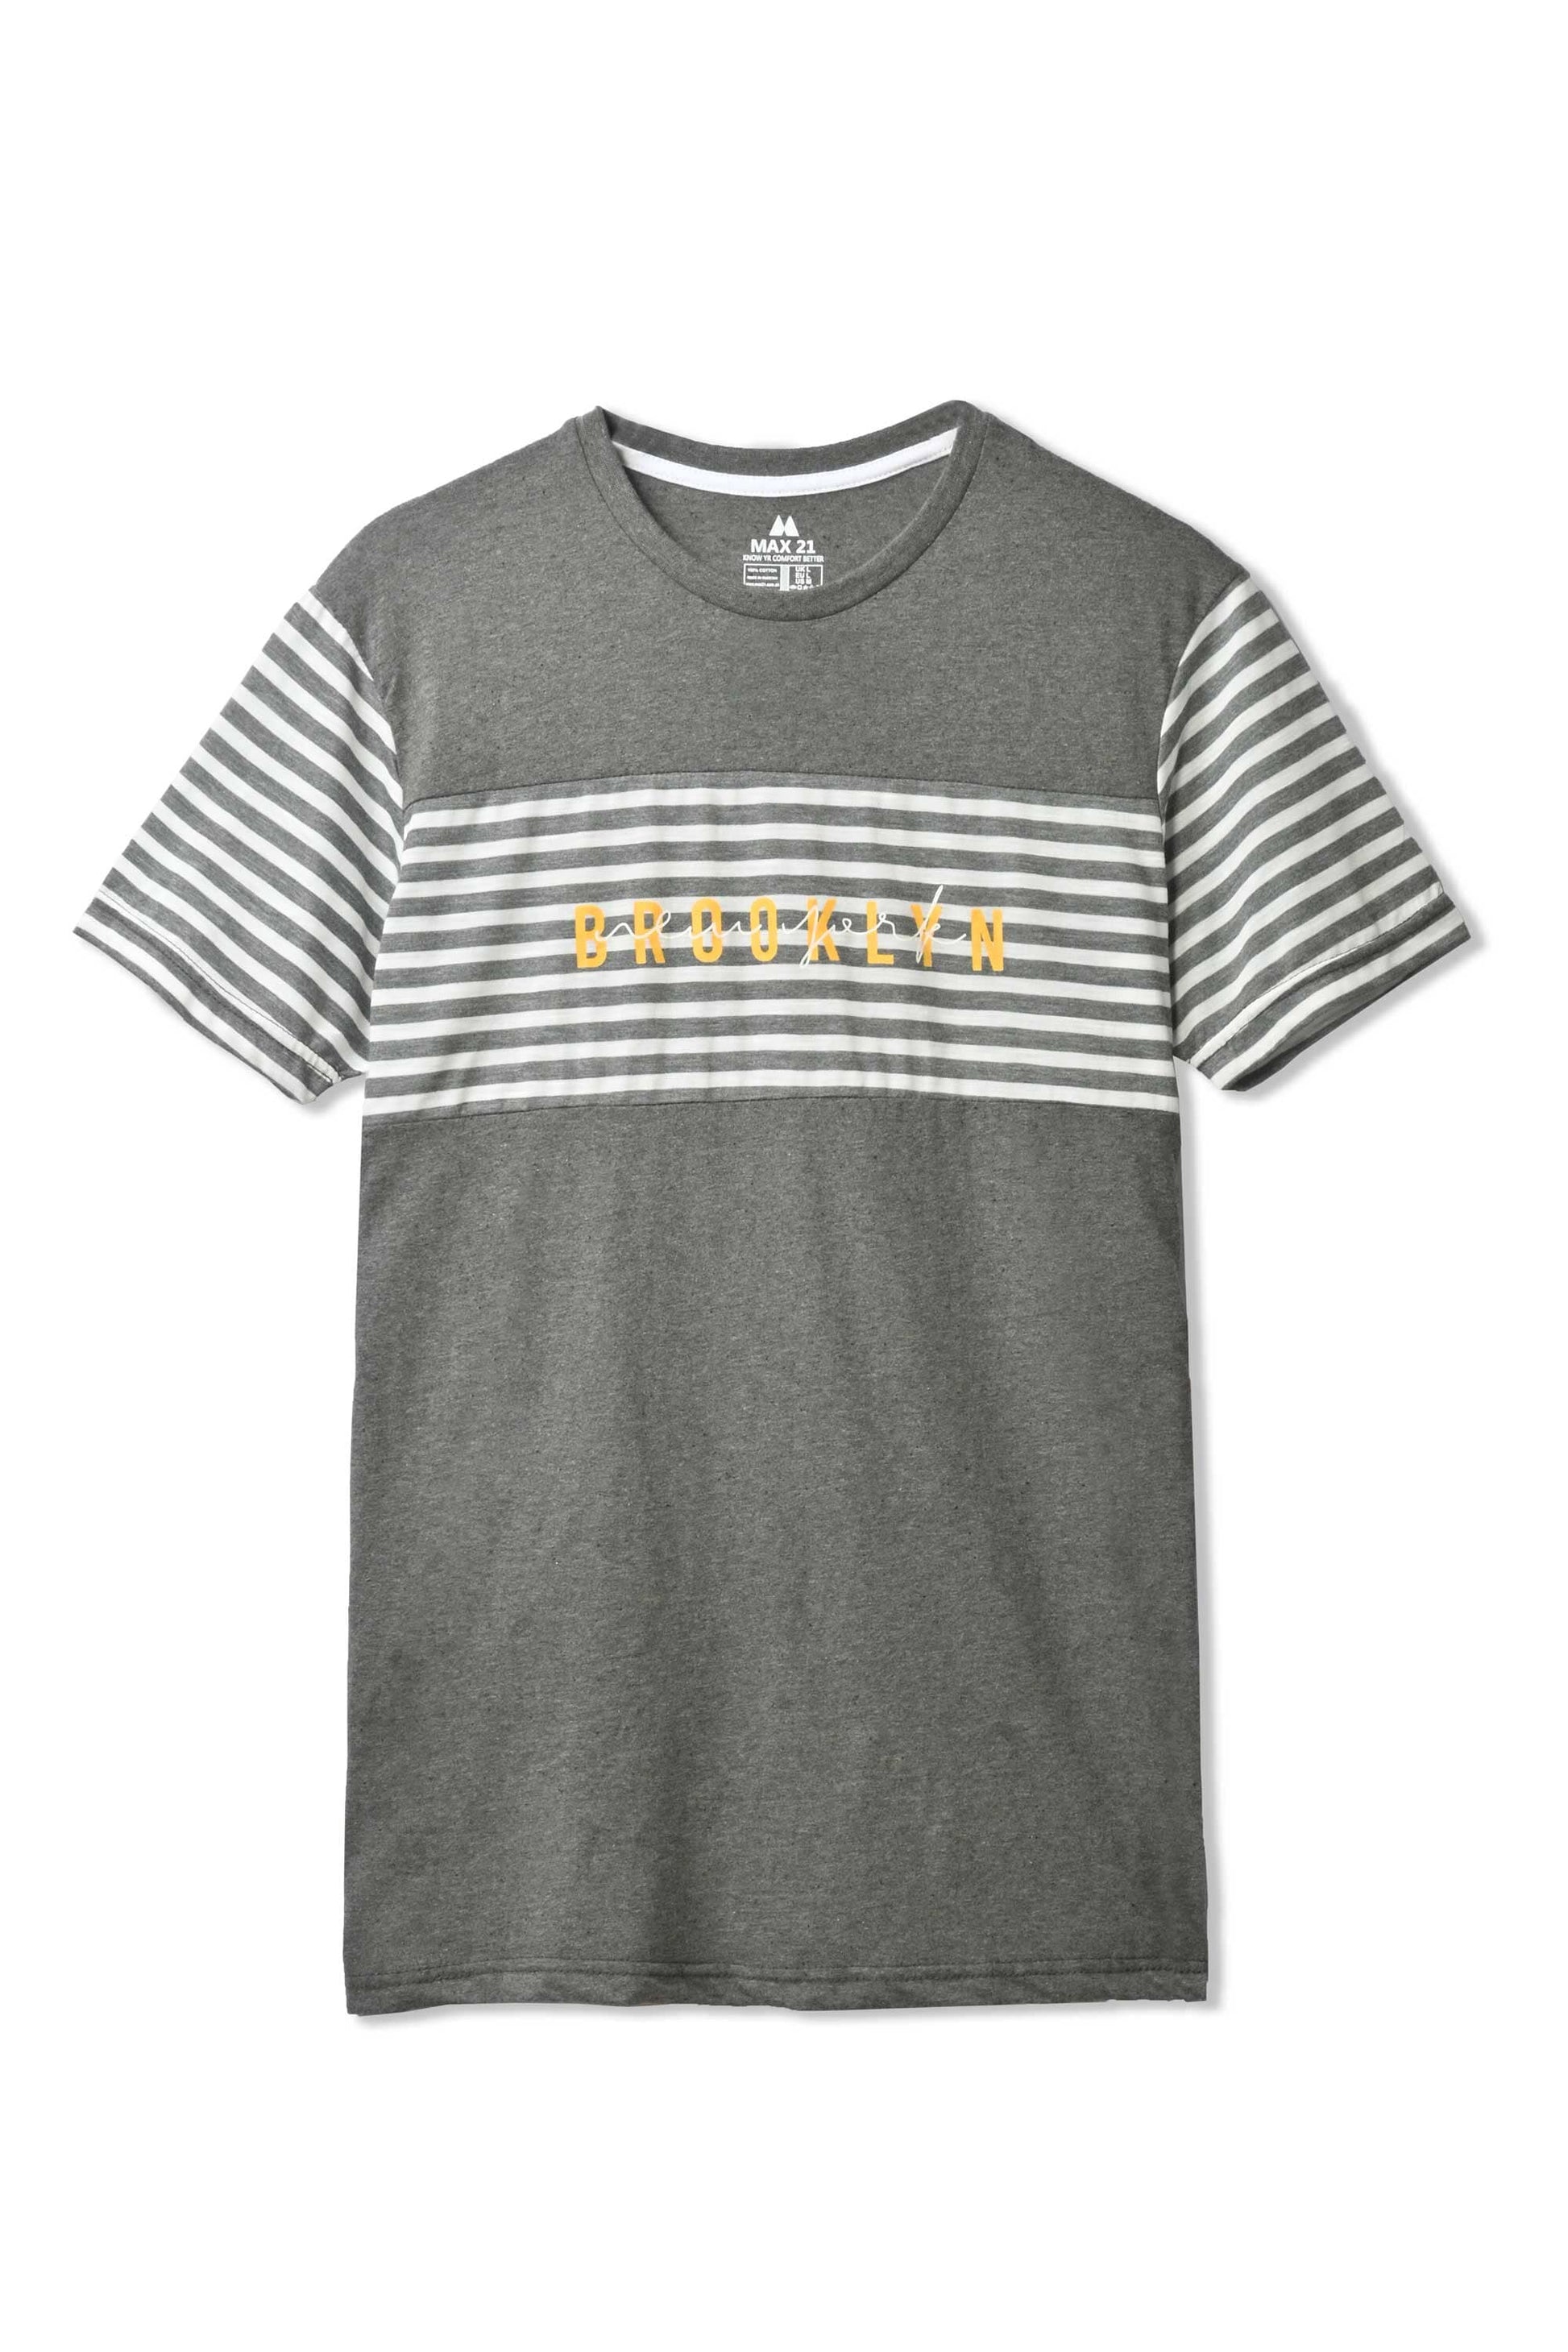 Max 21 Men's Brooklyn Printed Short Sleeve Tee Shirt